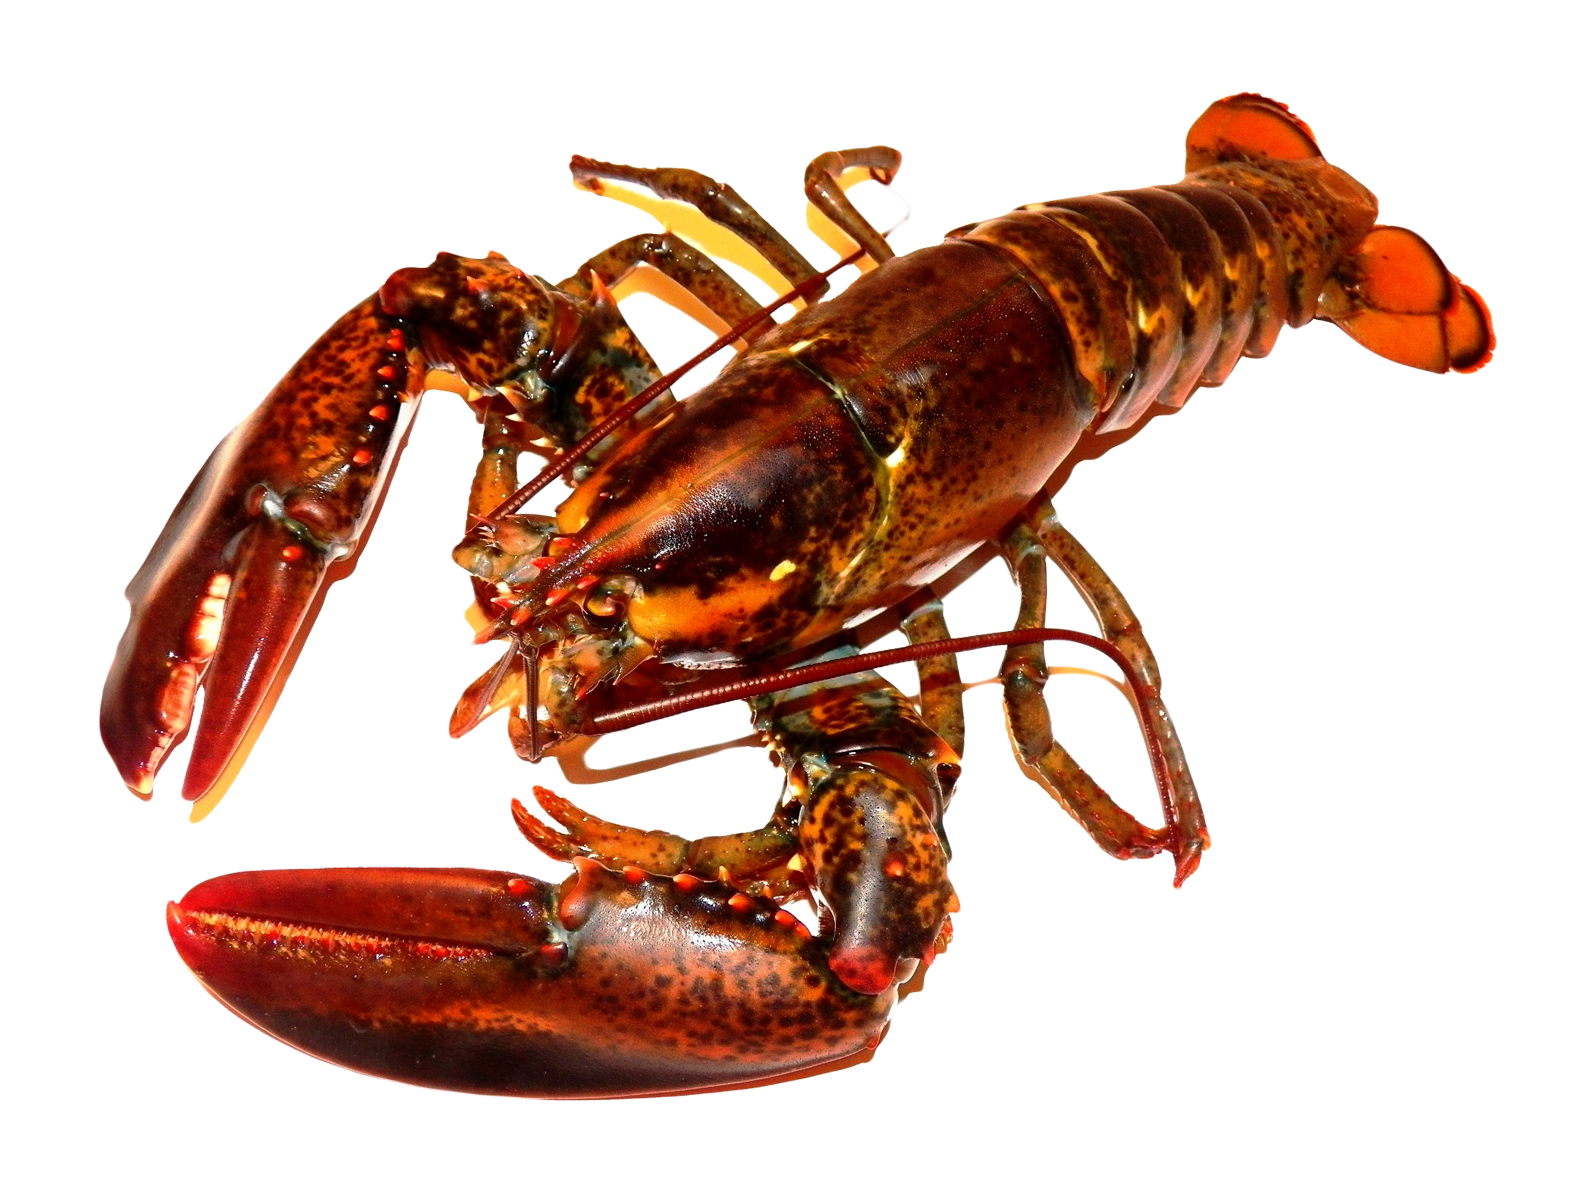 Lobster HD PNG-PlusPNG.com-15